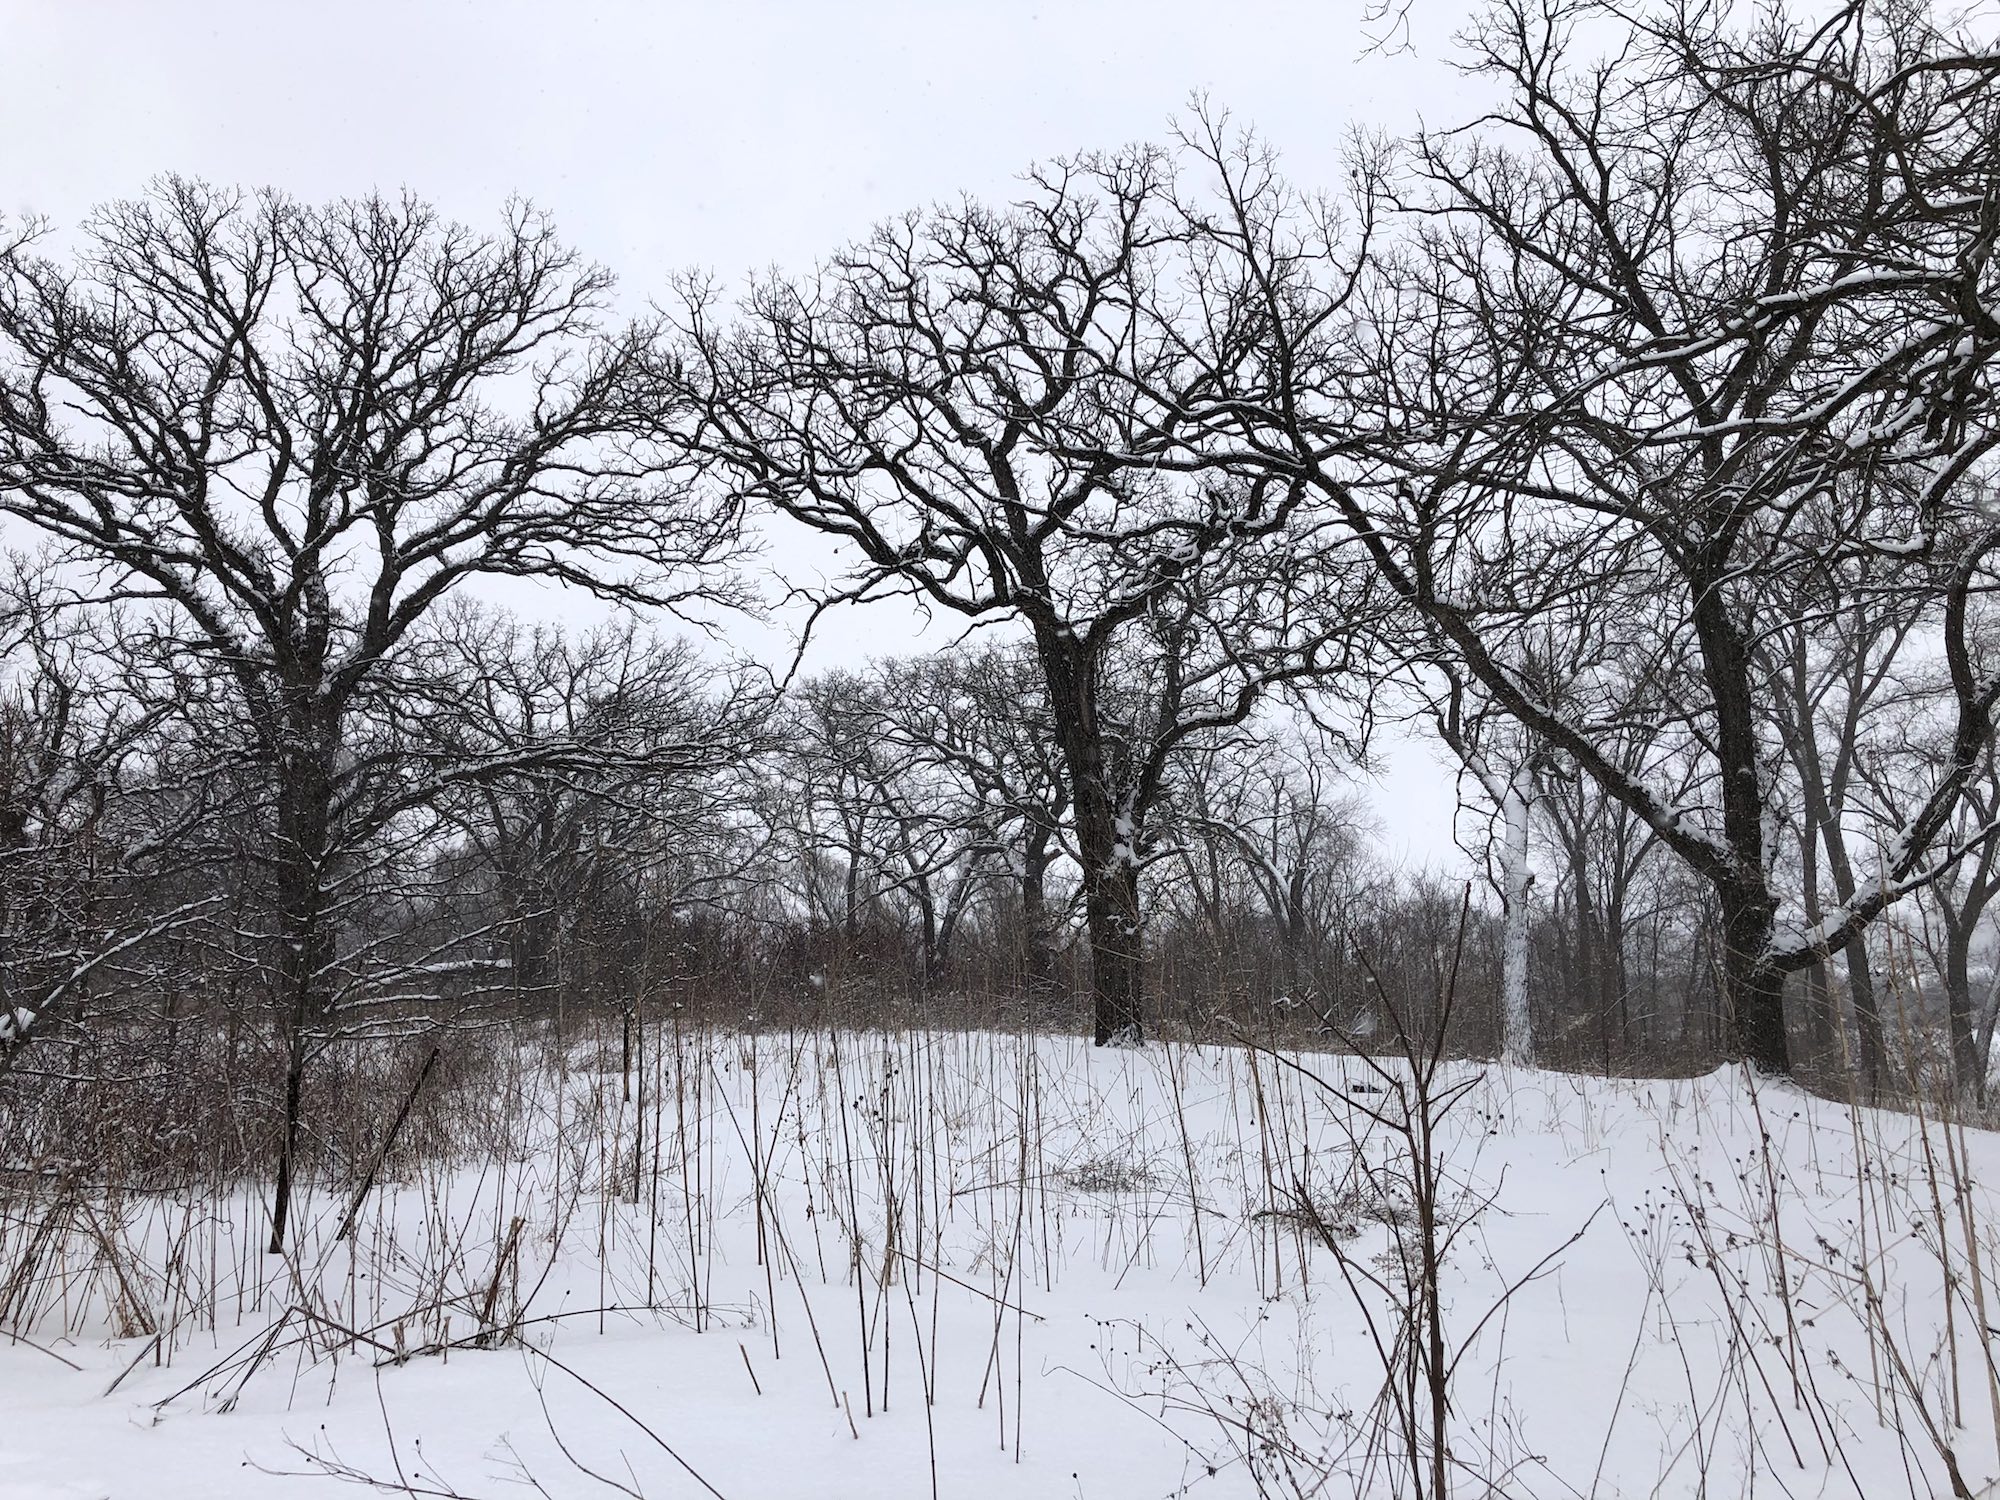 Oak Savanna on February 17, 2019 in University of Wisconsin Arboretum in Madison, Wisconsin on the north shore of Lake Wingra.